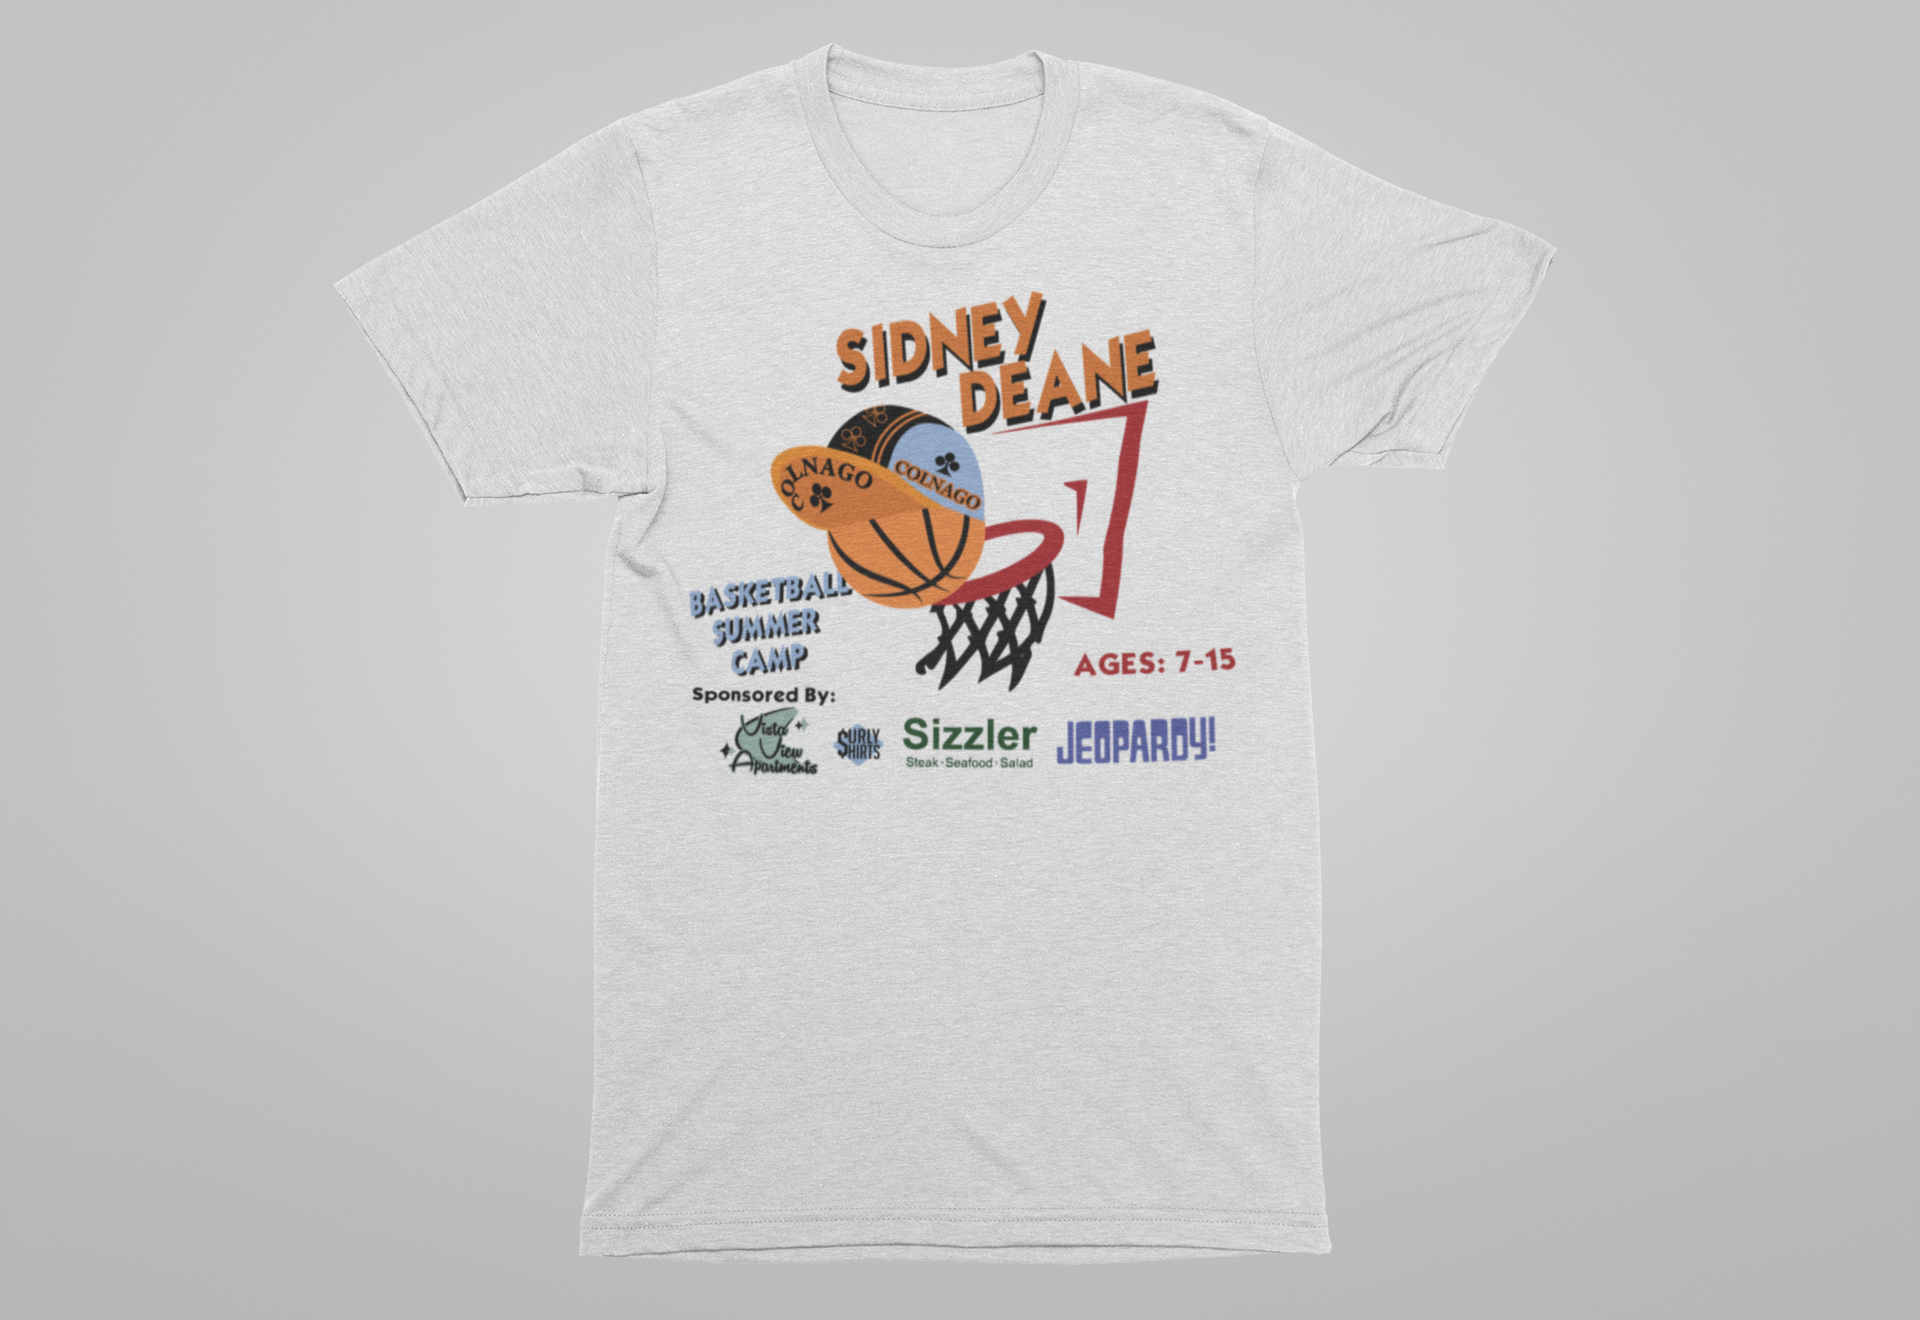 Sidney Deane Basket Ball Camp Tee